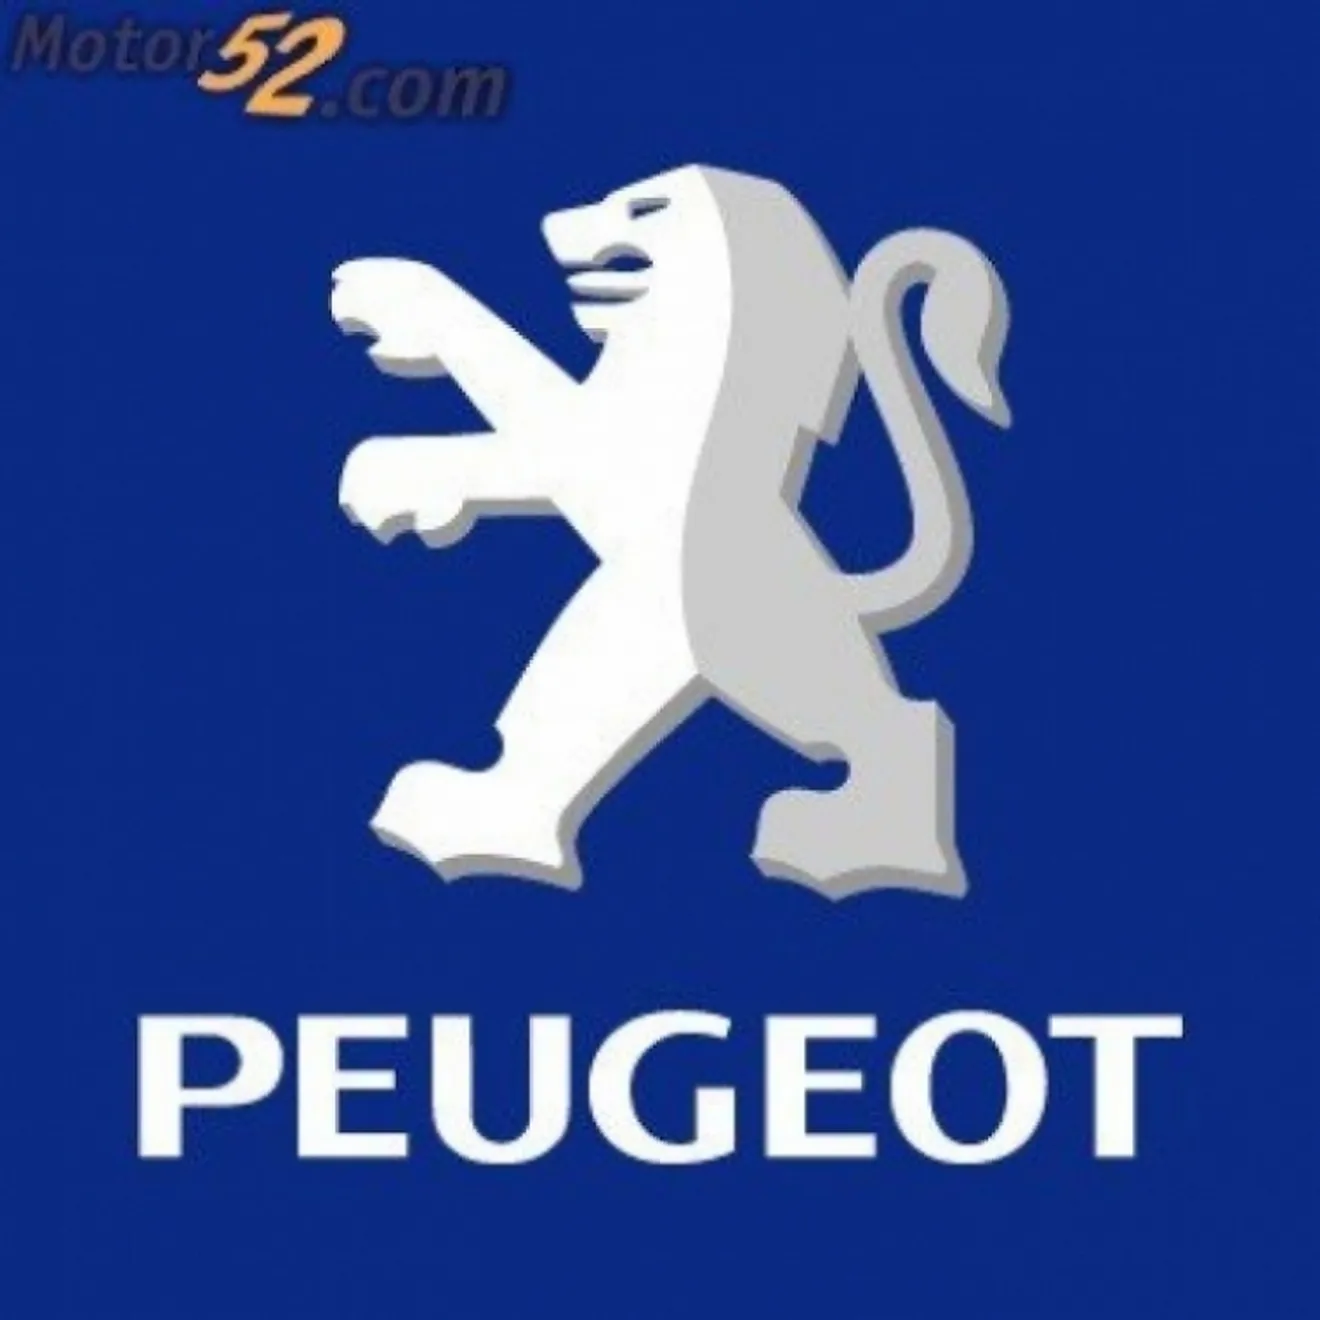 Compren Peugeot y salven al mundo